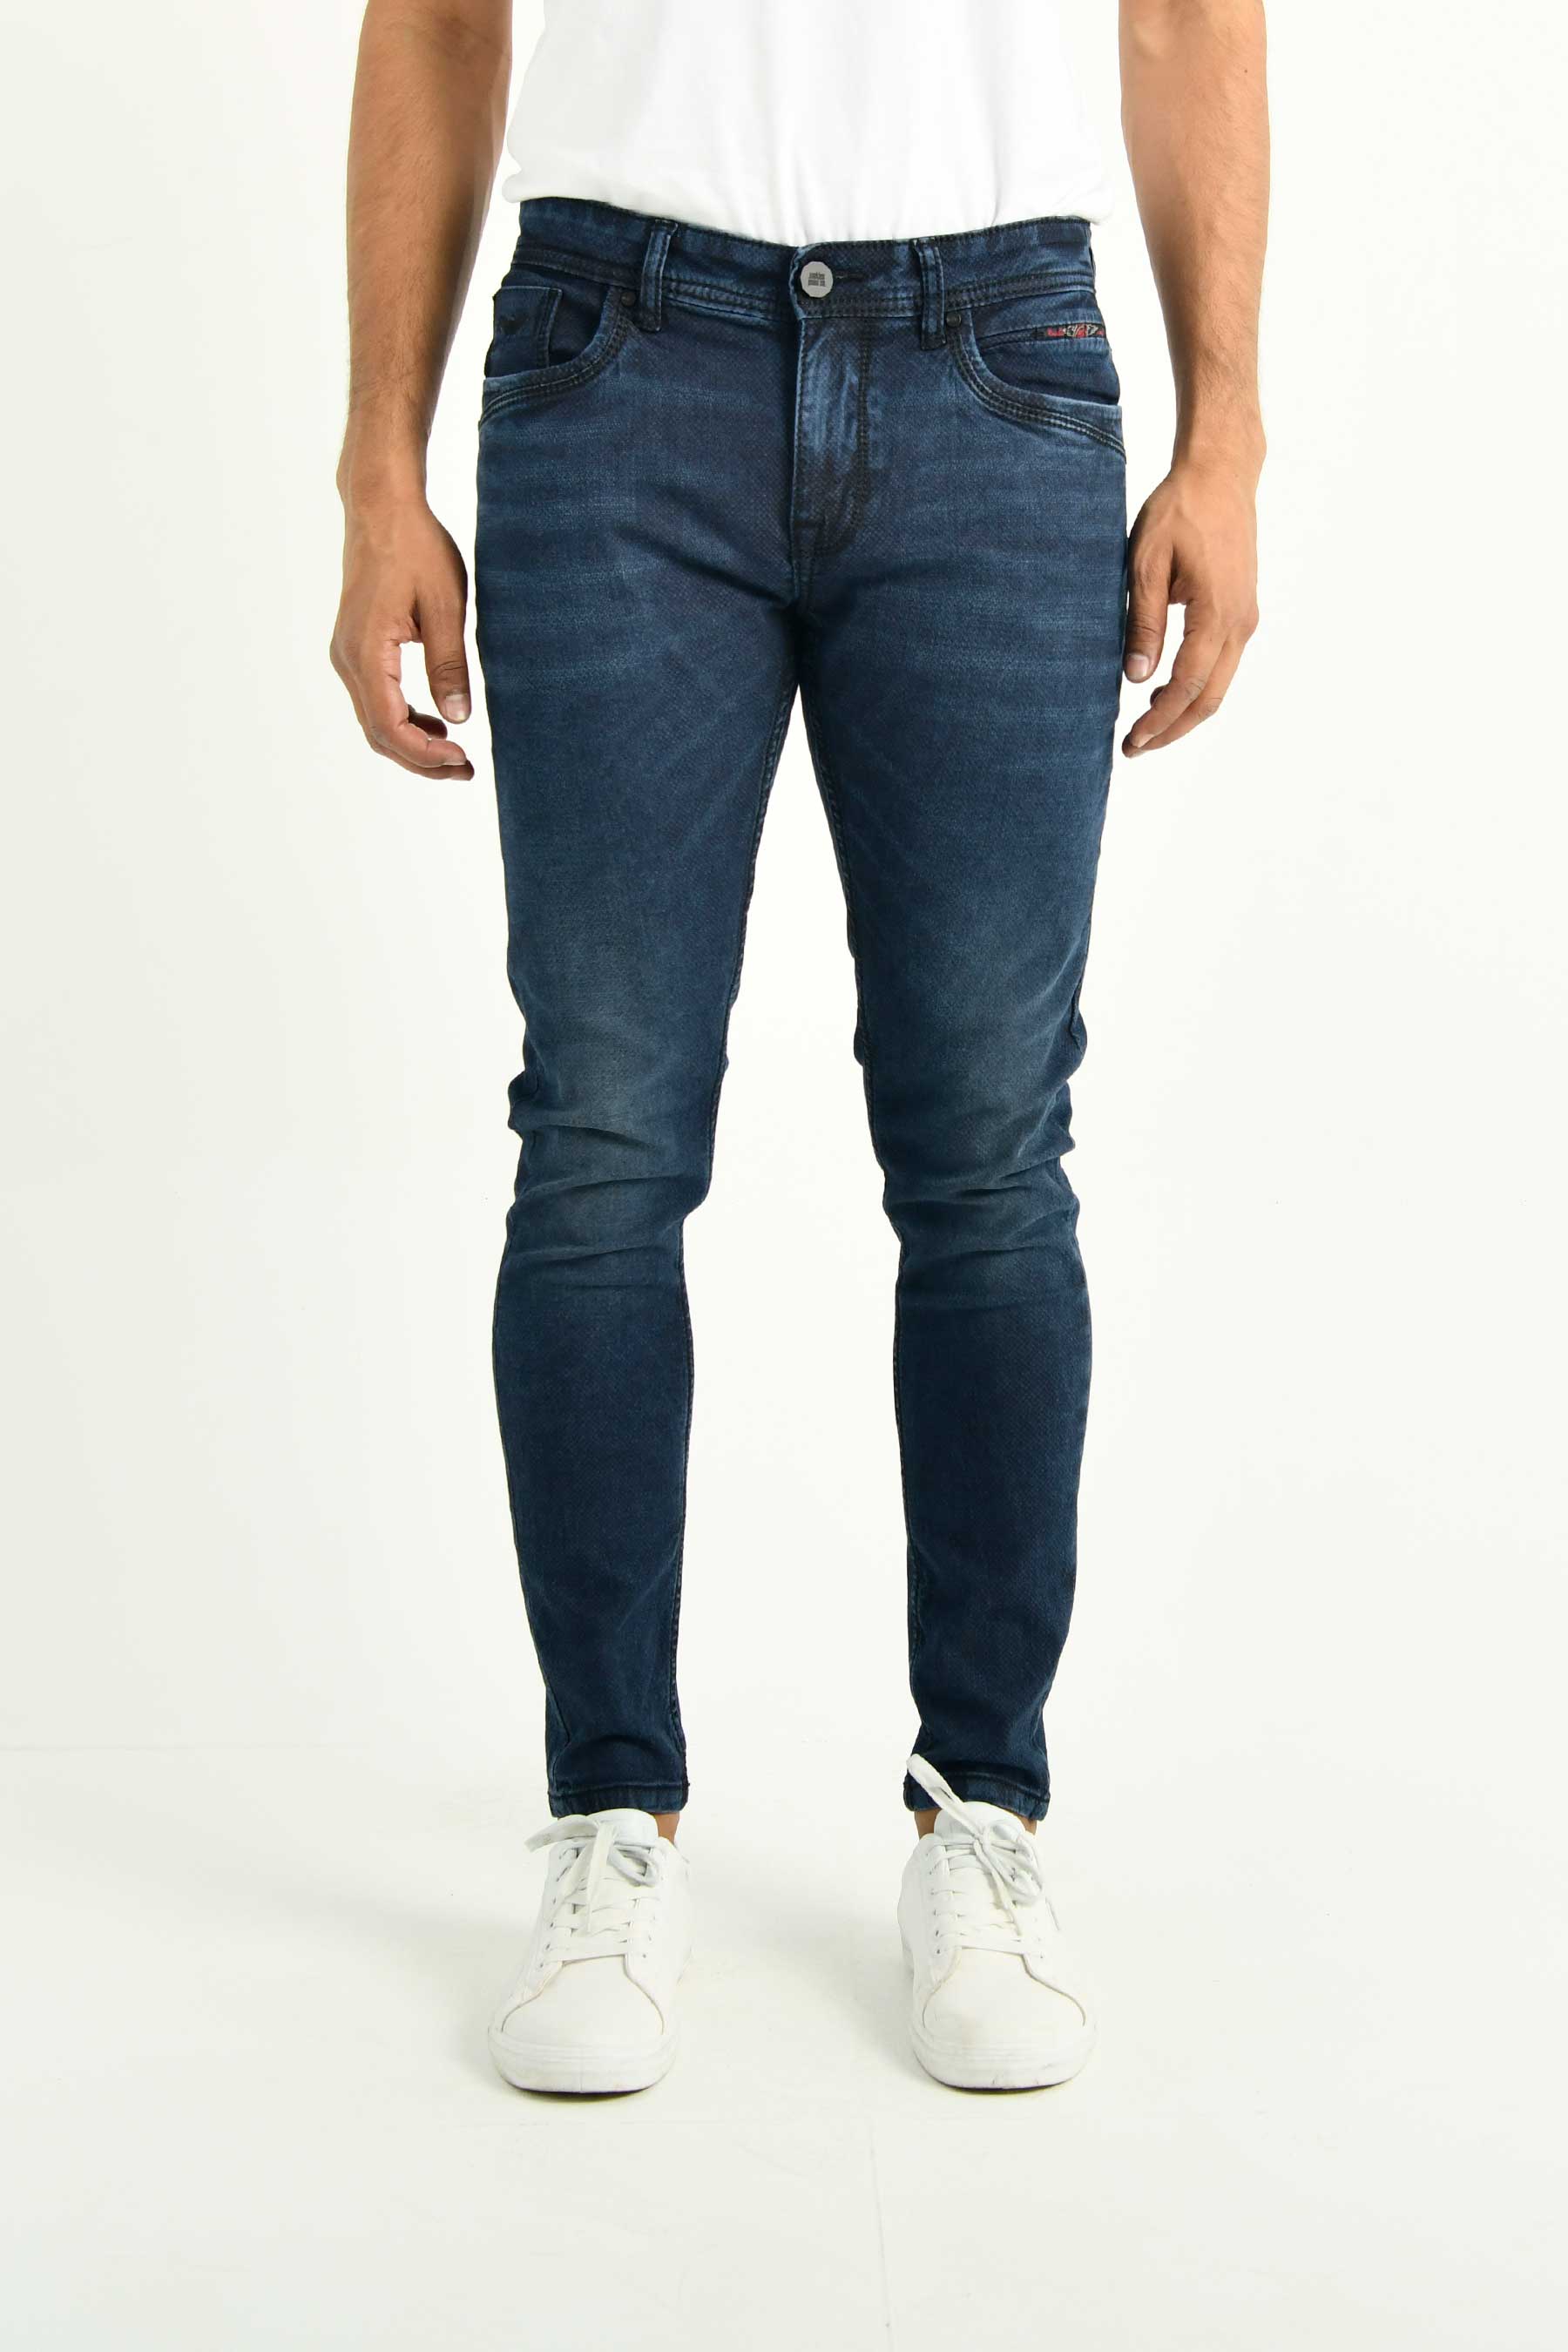 Men’s Denim jeans- RJ3889